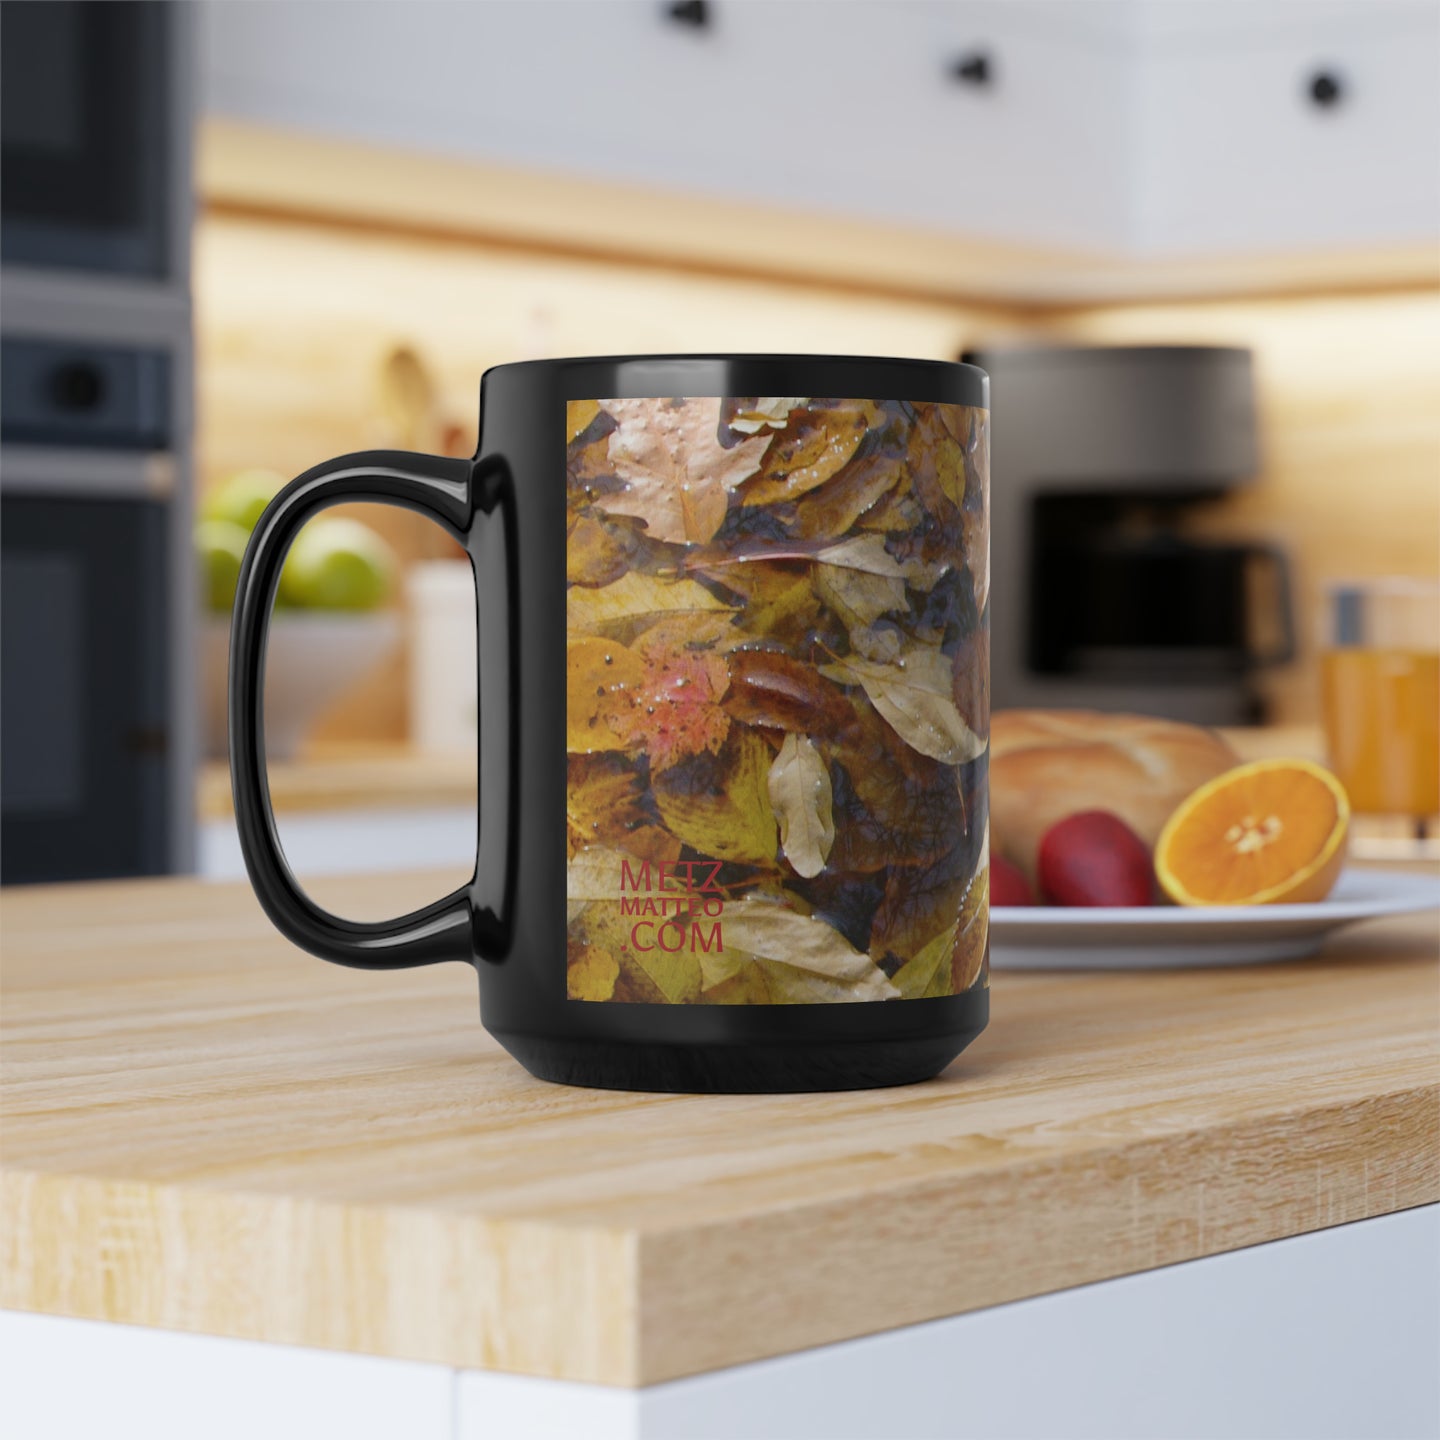 Floating Autumn Fall Leaves | Ceramic Mug | 15oz | Black | Red Yellow